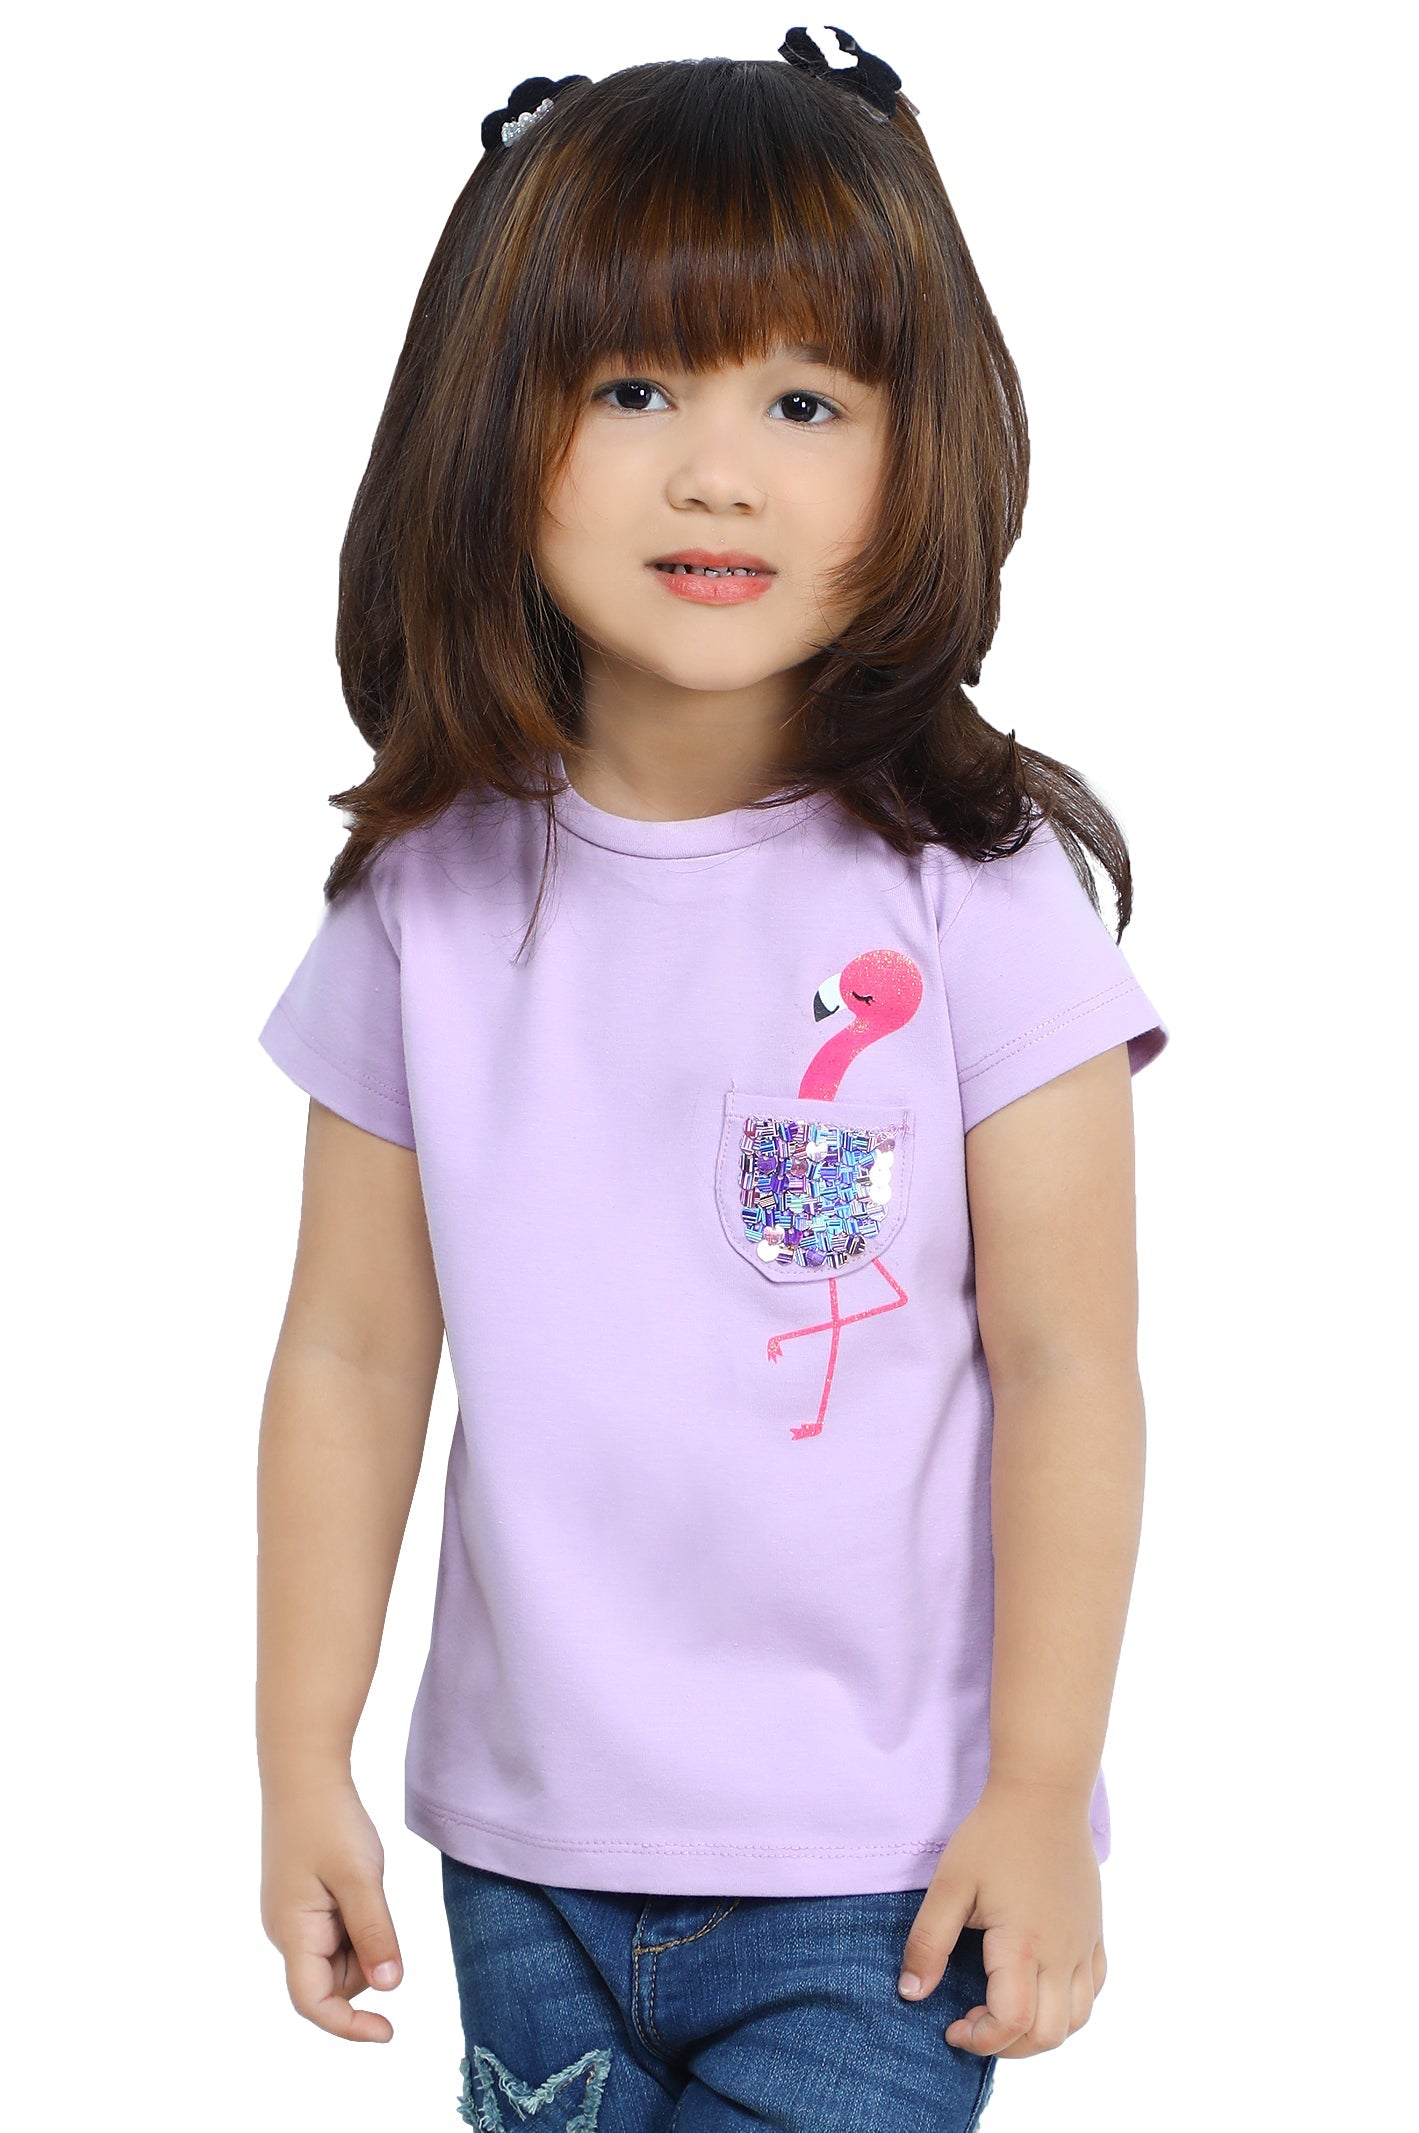 Girls T-Shirt In Purple SKU: KGA-0265-PURPLE - Diners